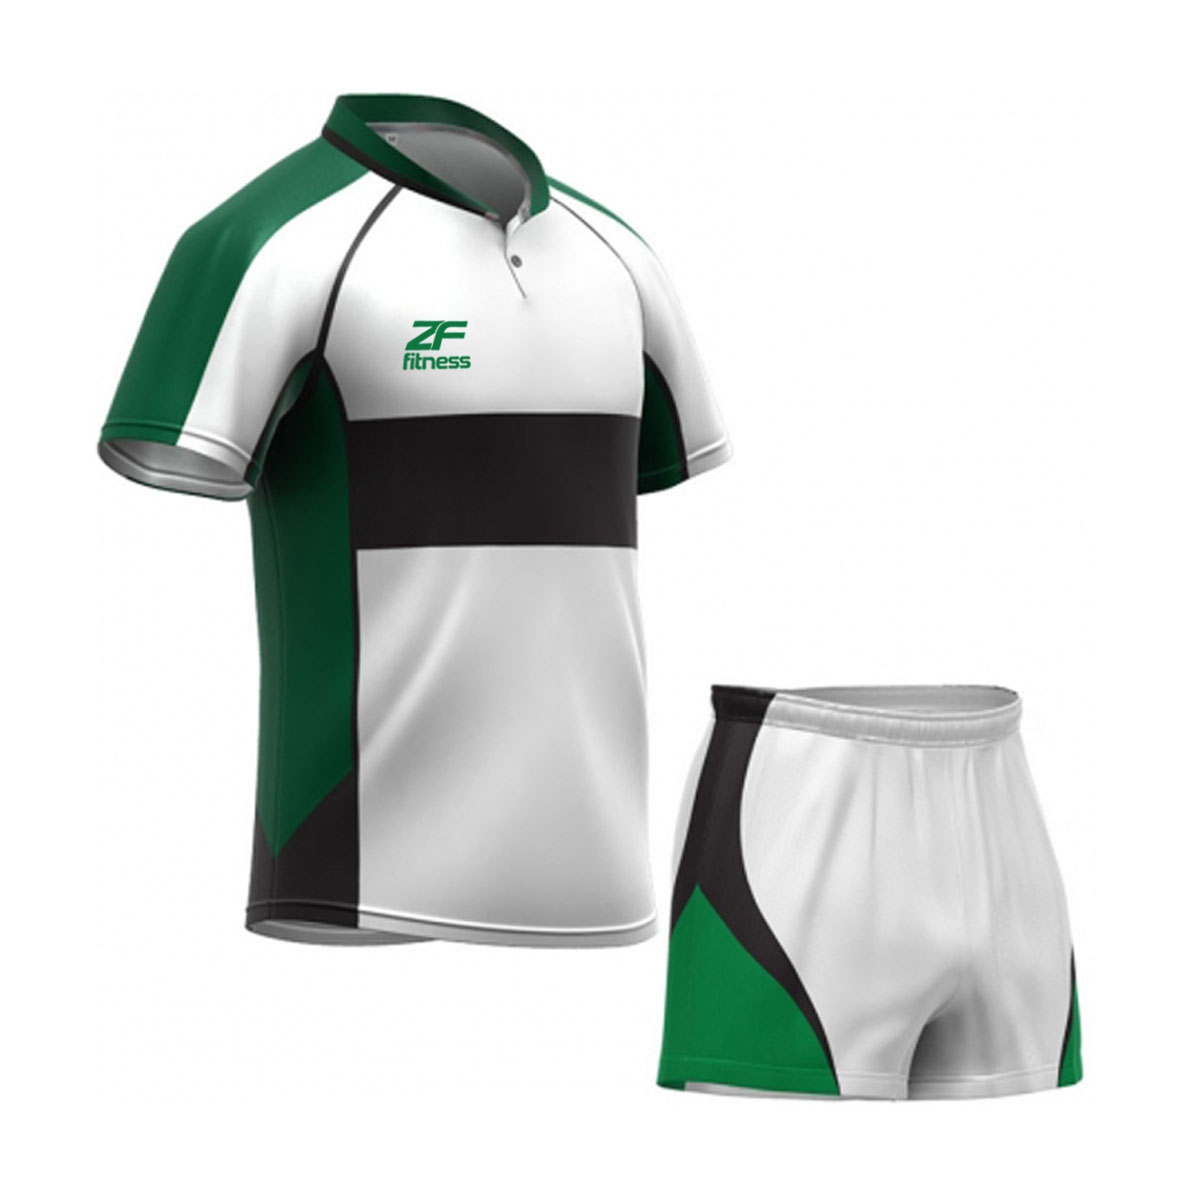 Rugby Uniform